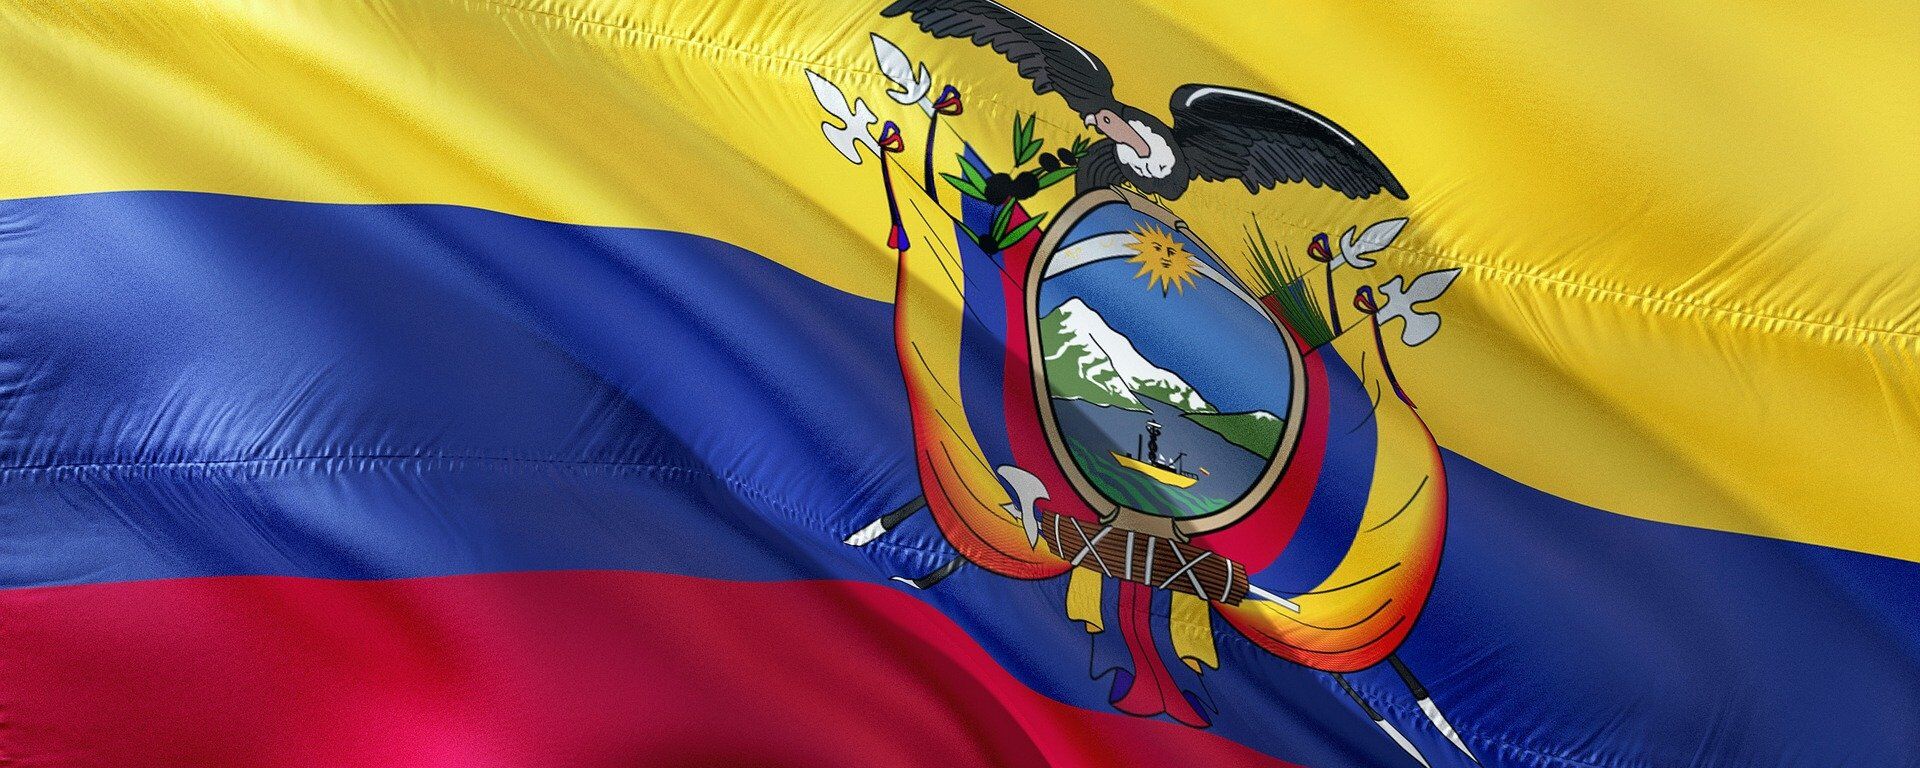 La bandera de Ecuador - Sputnik Mundo, 1920, 13.12.2021